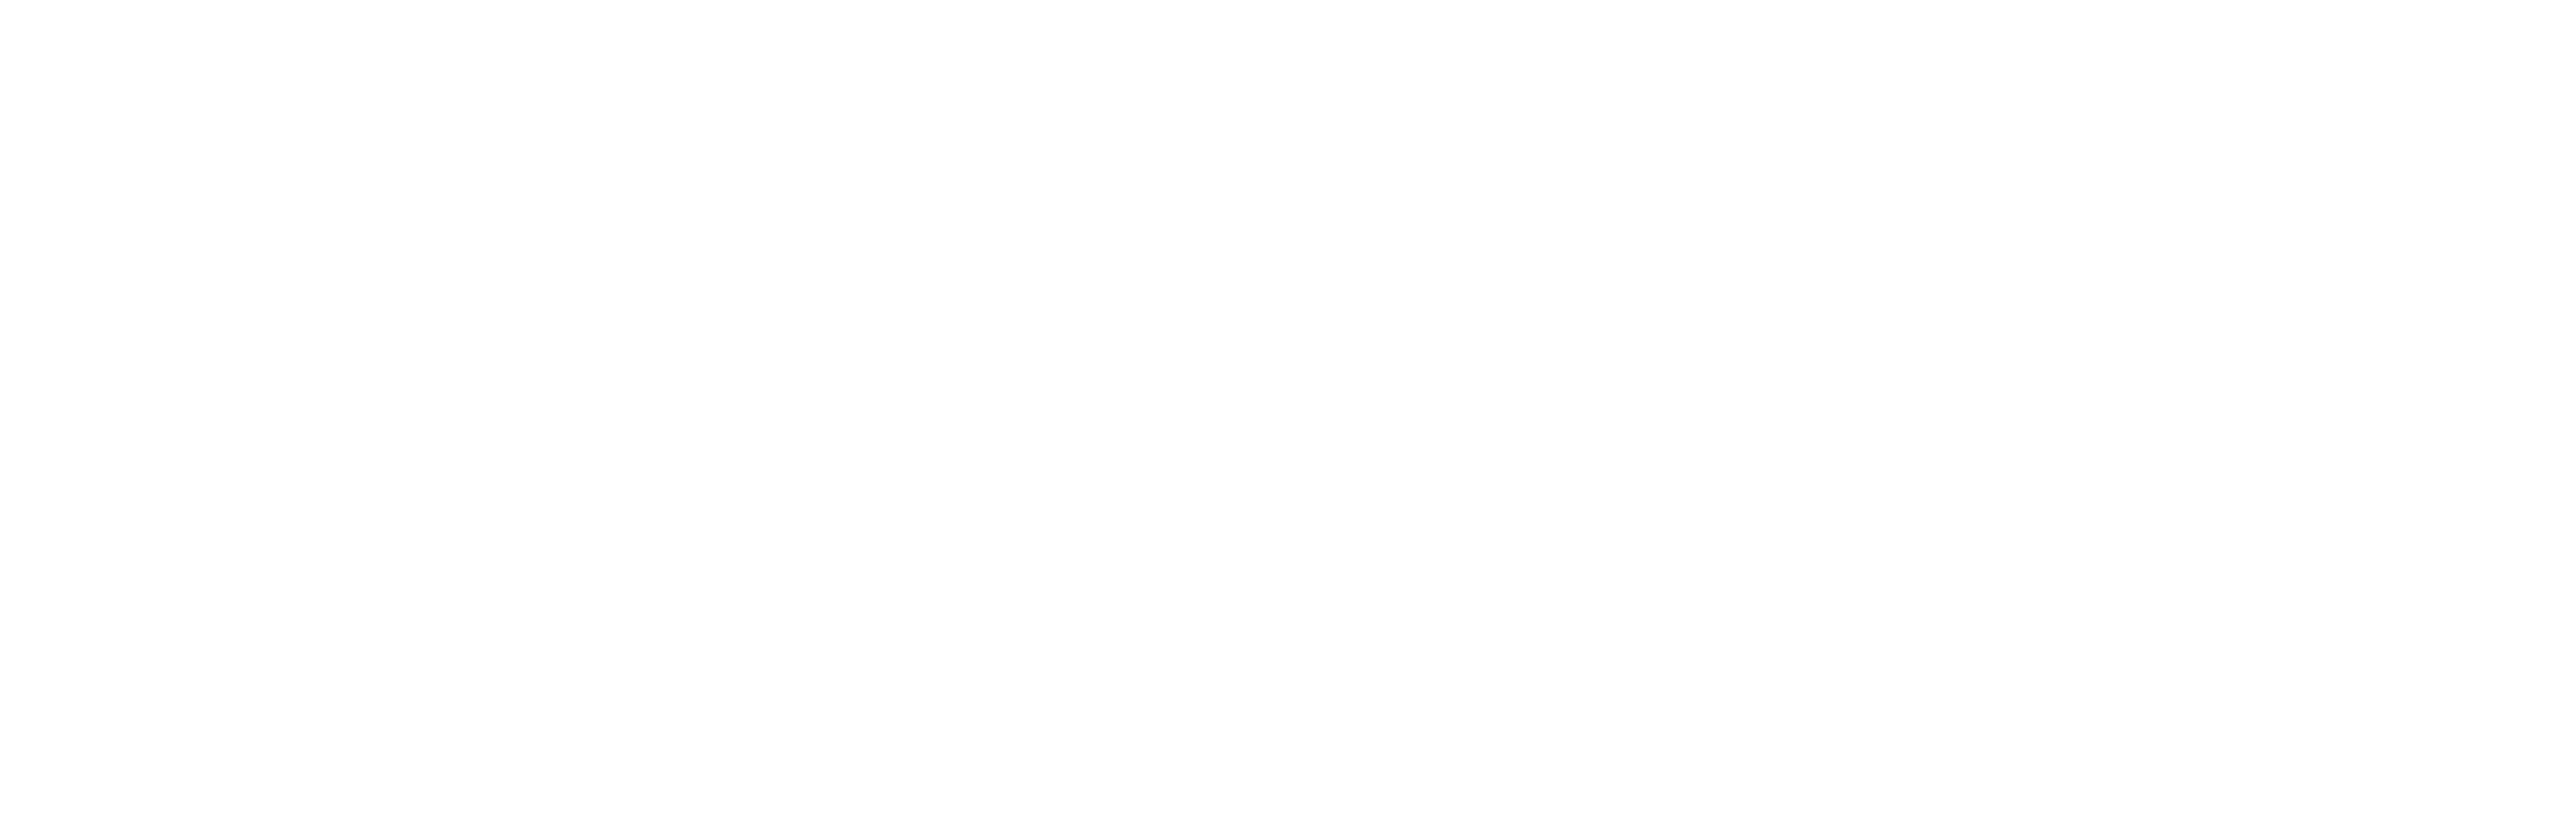 AniCura Vetamic Cèntre Veterinari logo